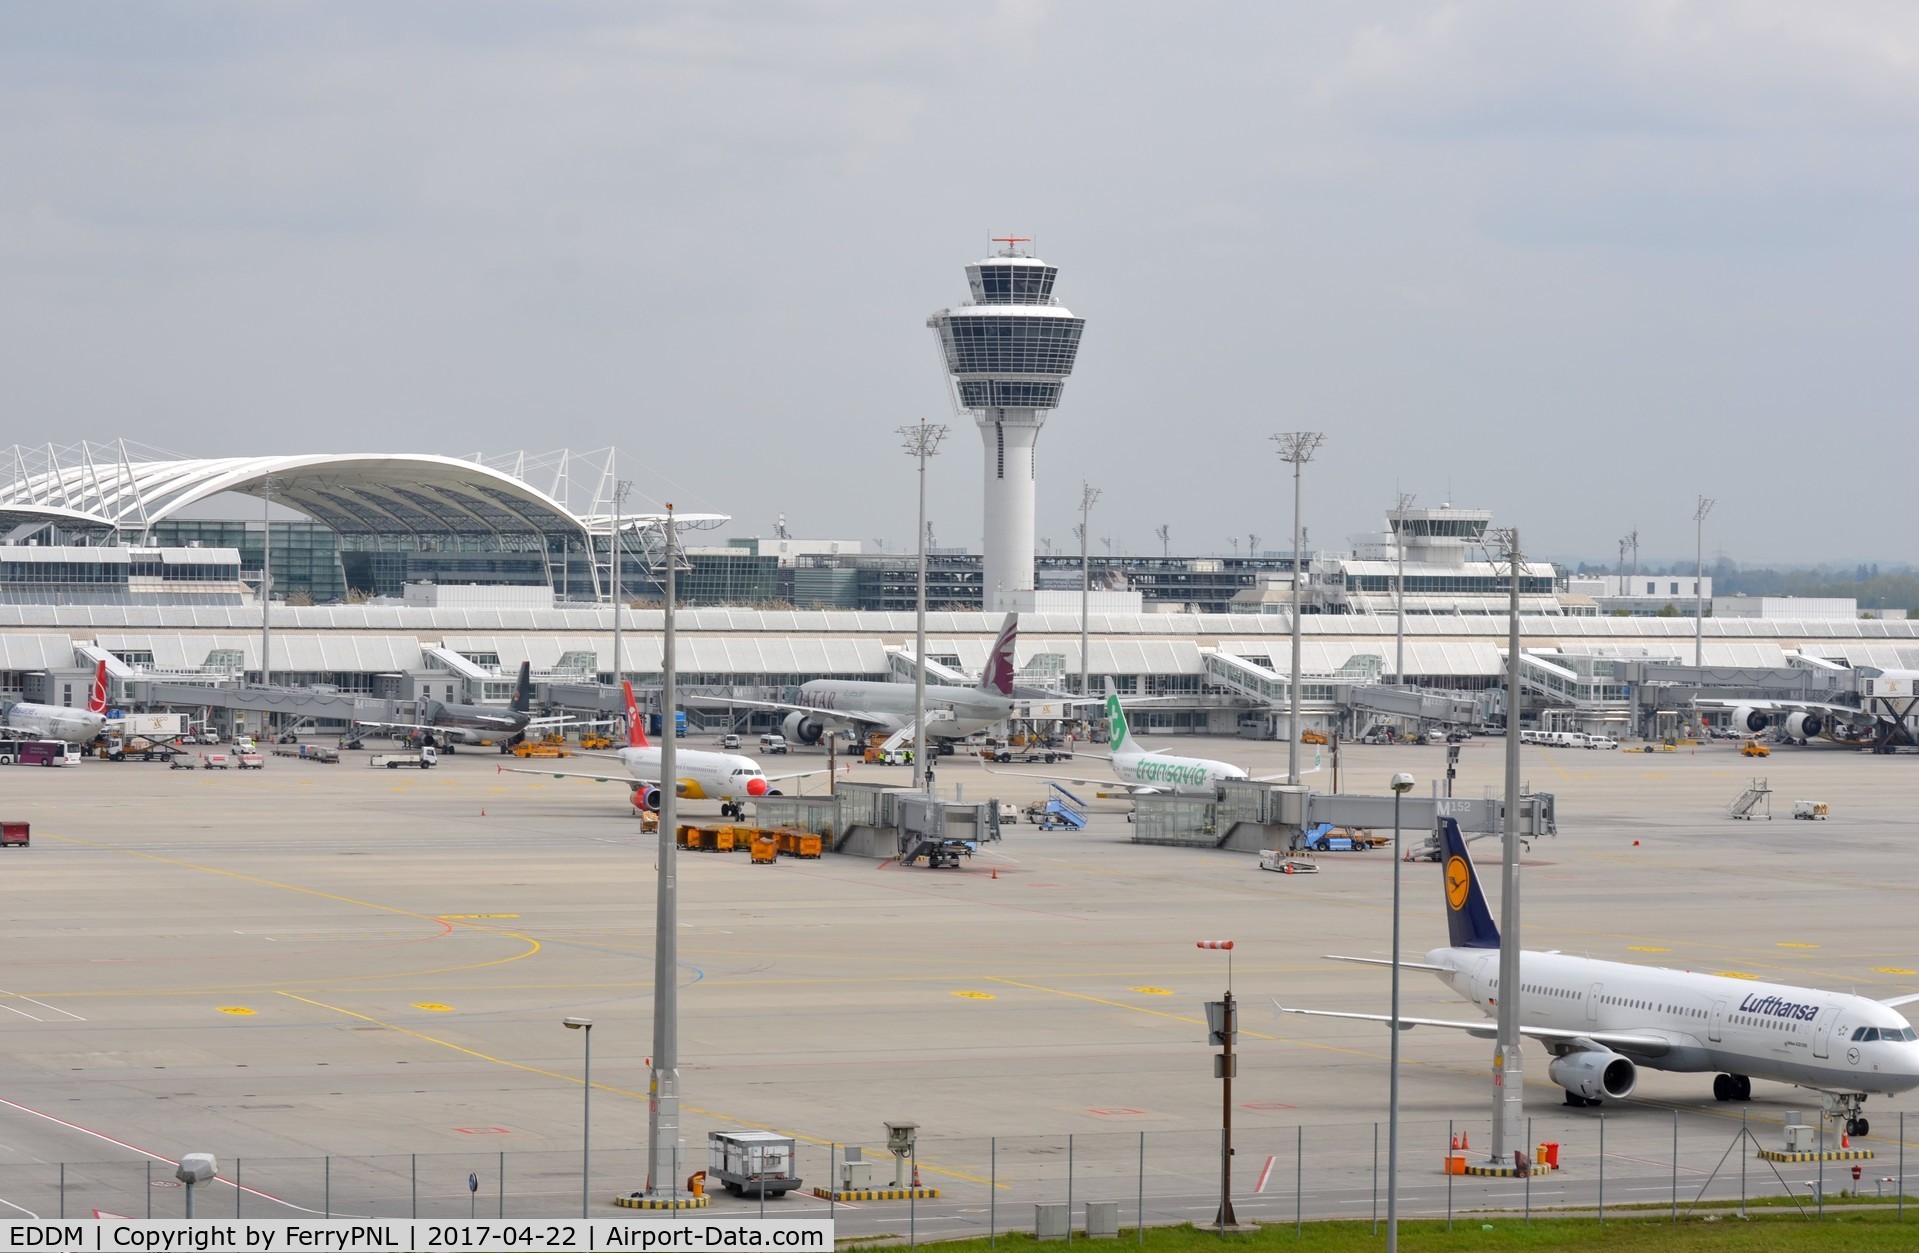 Munich International Airport (Franz Josef Strauß International Airport), Munich Germany (EDDM) - View from the visitor center at MUC